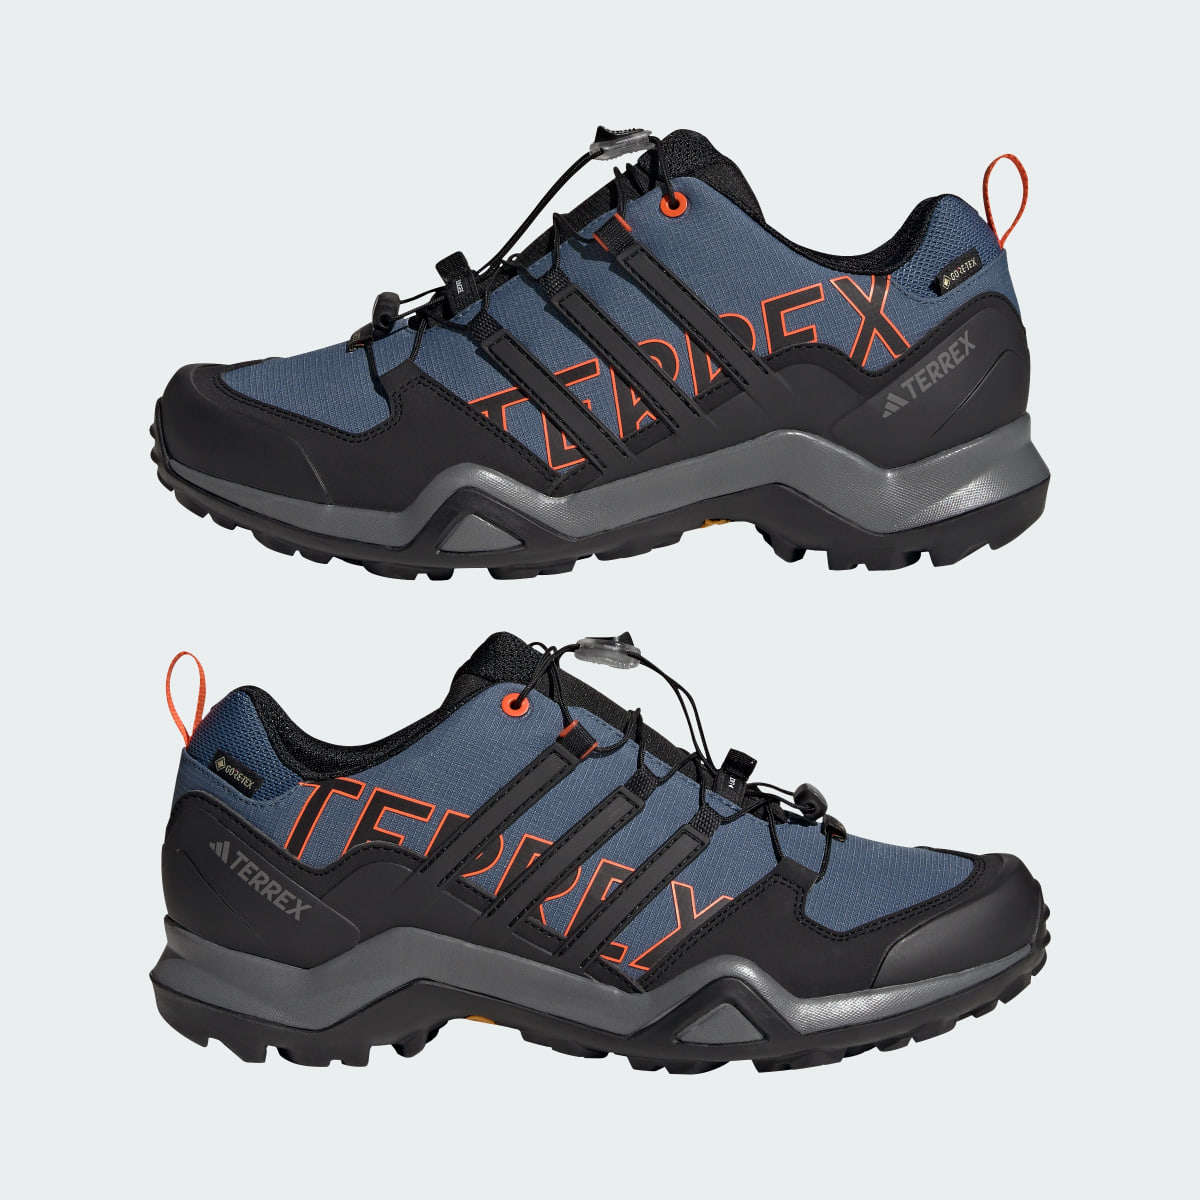 Adidas Terrex Swift R2 GORE-TEX Hiking Shoes. 9